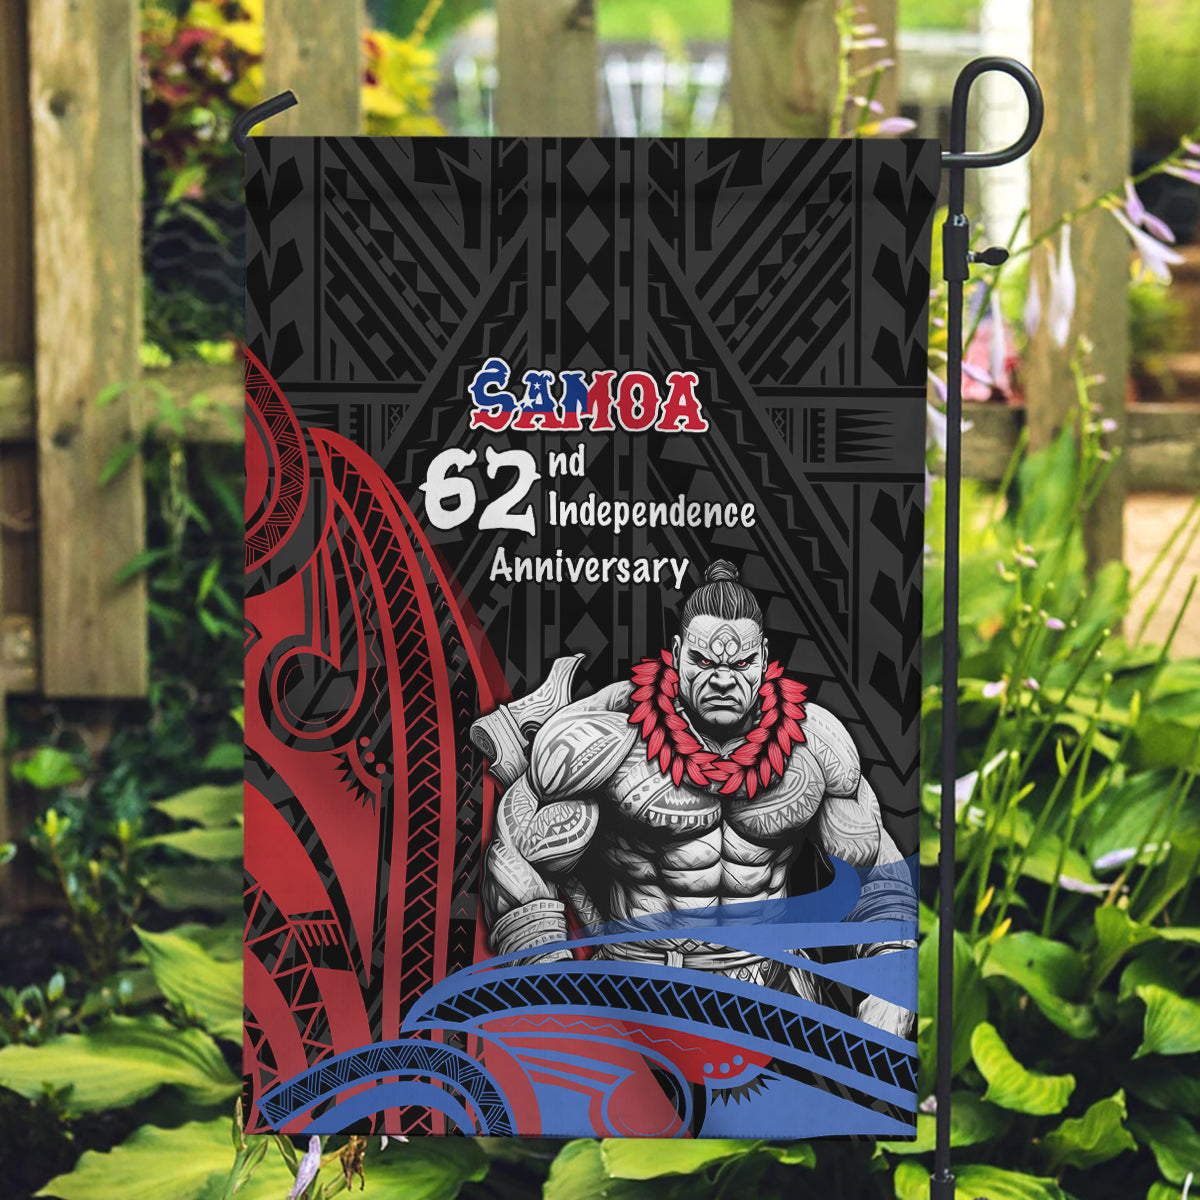 Samoa Independence Day Garden Flag Samoan Warriors Ula Fala LT05 Garden Flag Black - Polynesian Pride